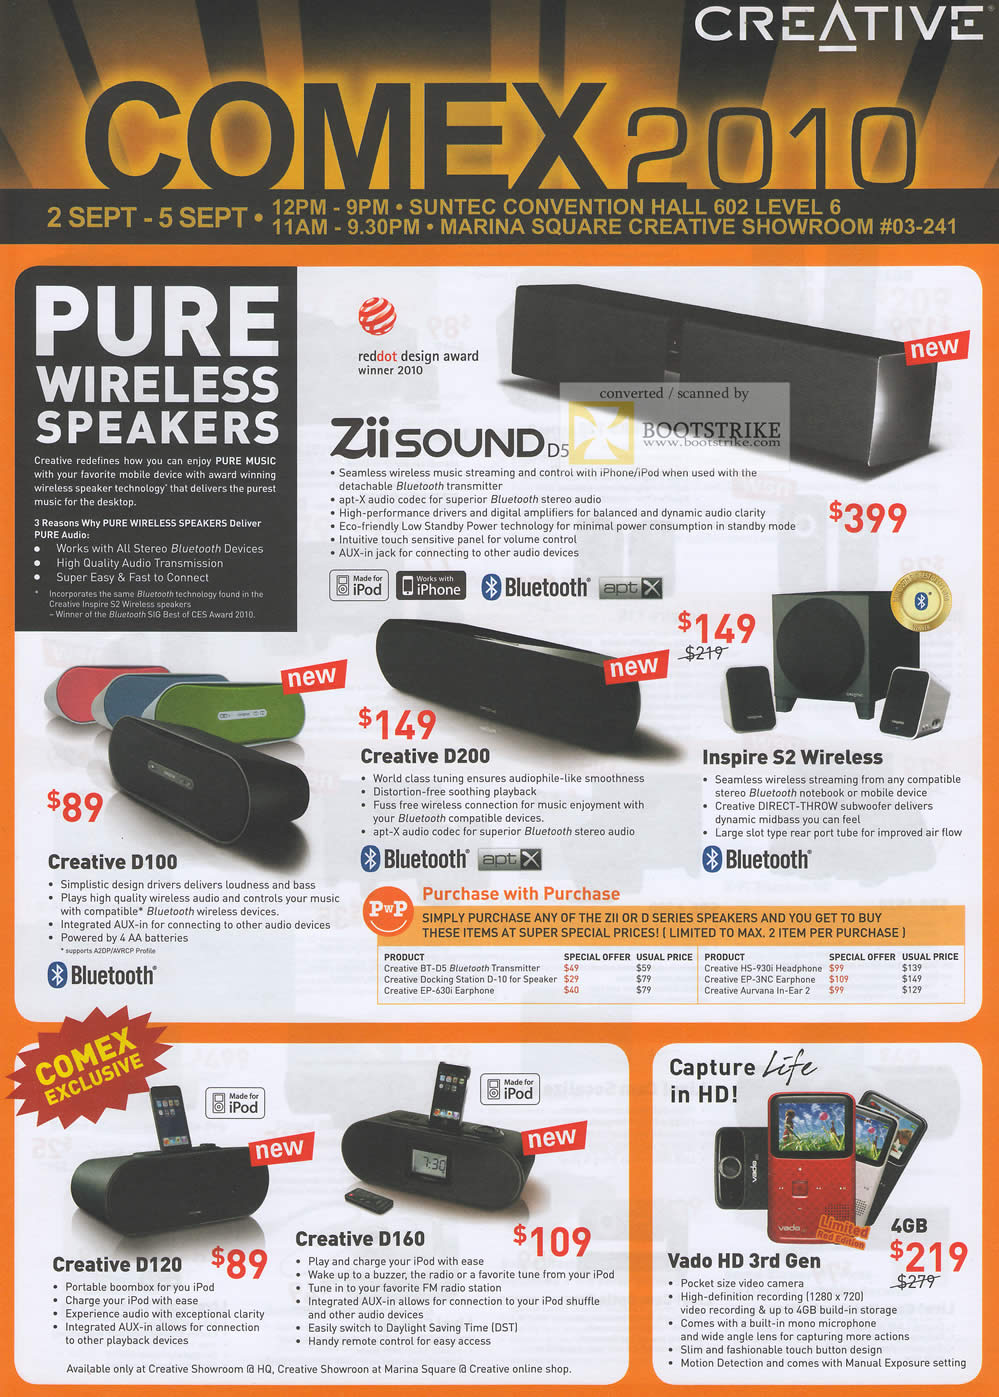 Comex 2010 price list image brochure of Creative Speakers Zii Sound D5 D100 D200 Inspire S2 Wireless D120 D160 Vado HD 3rd Gen Camcorder